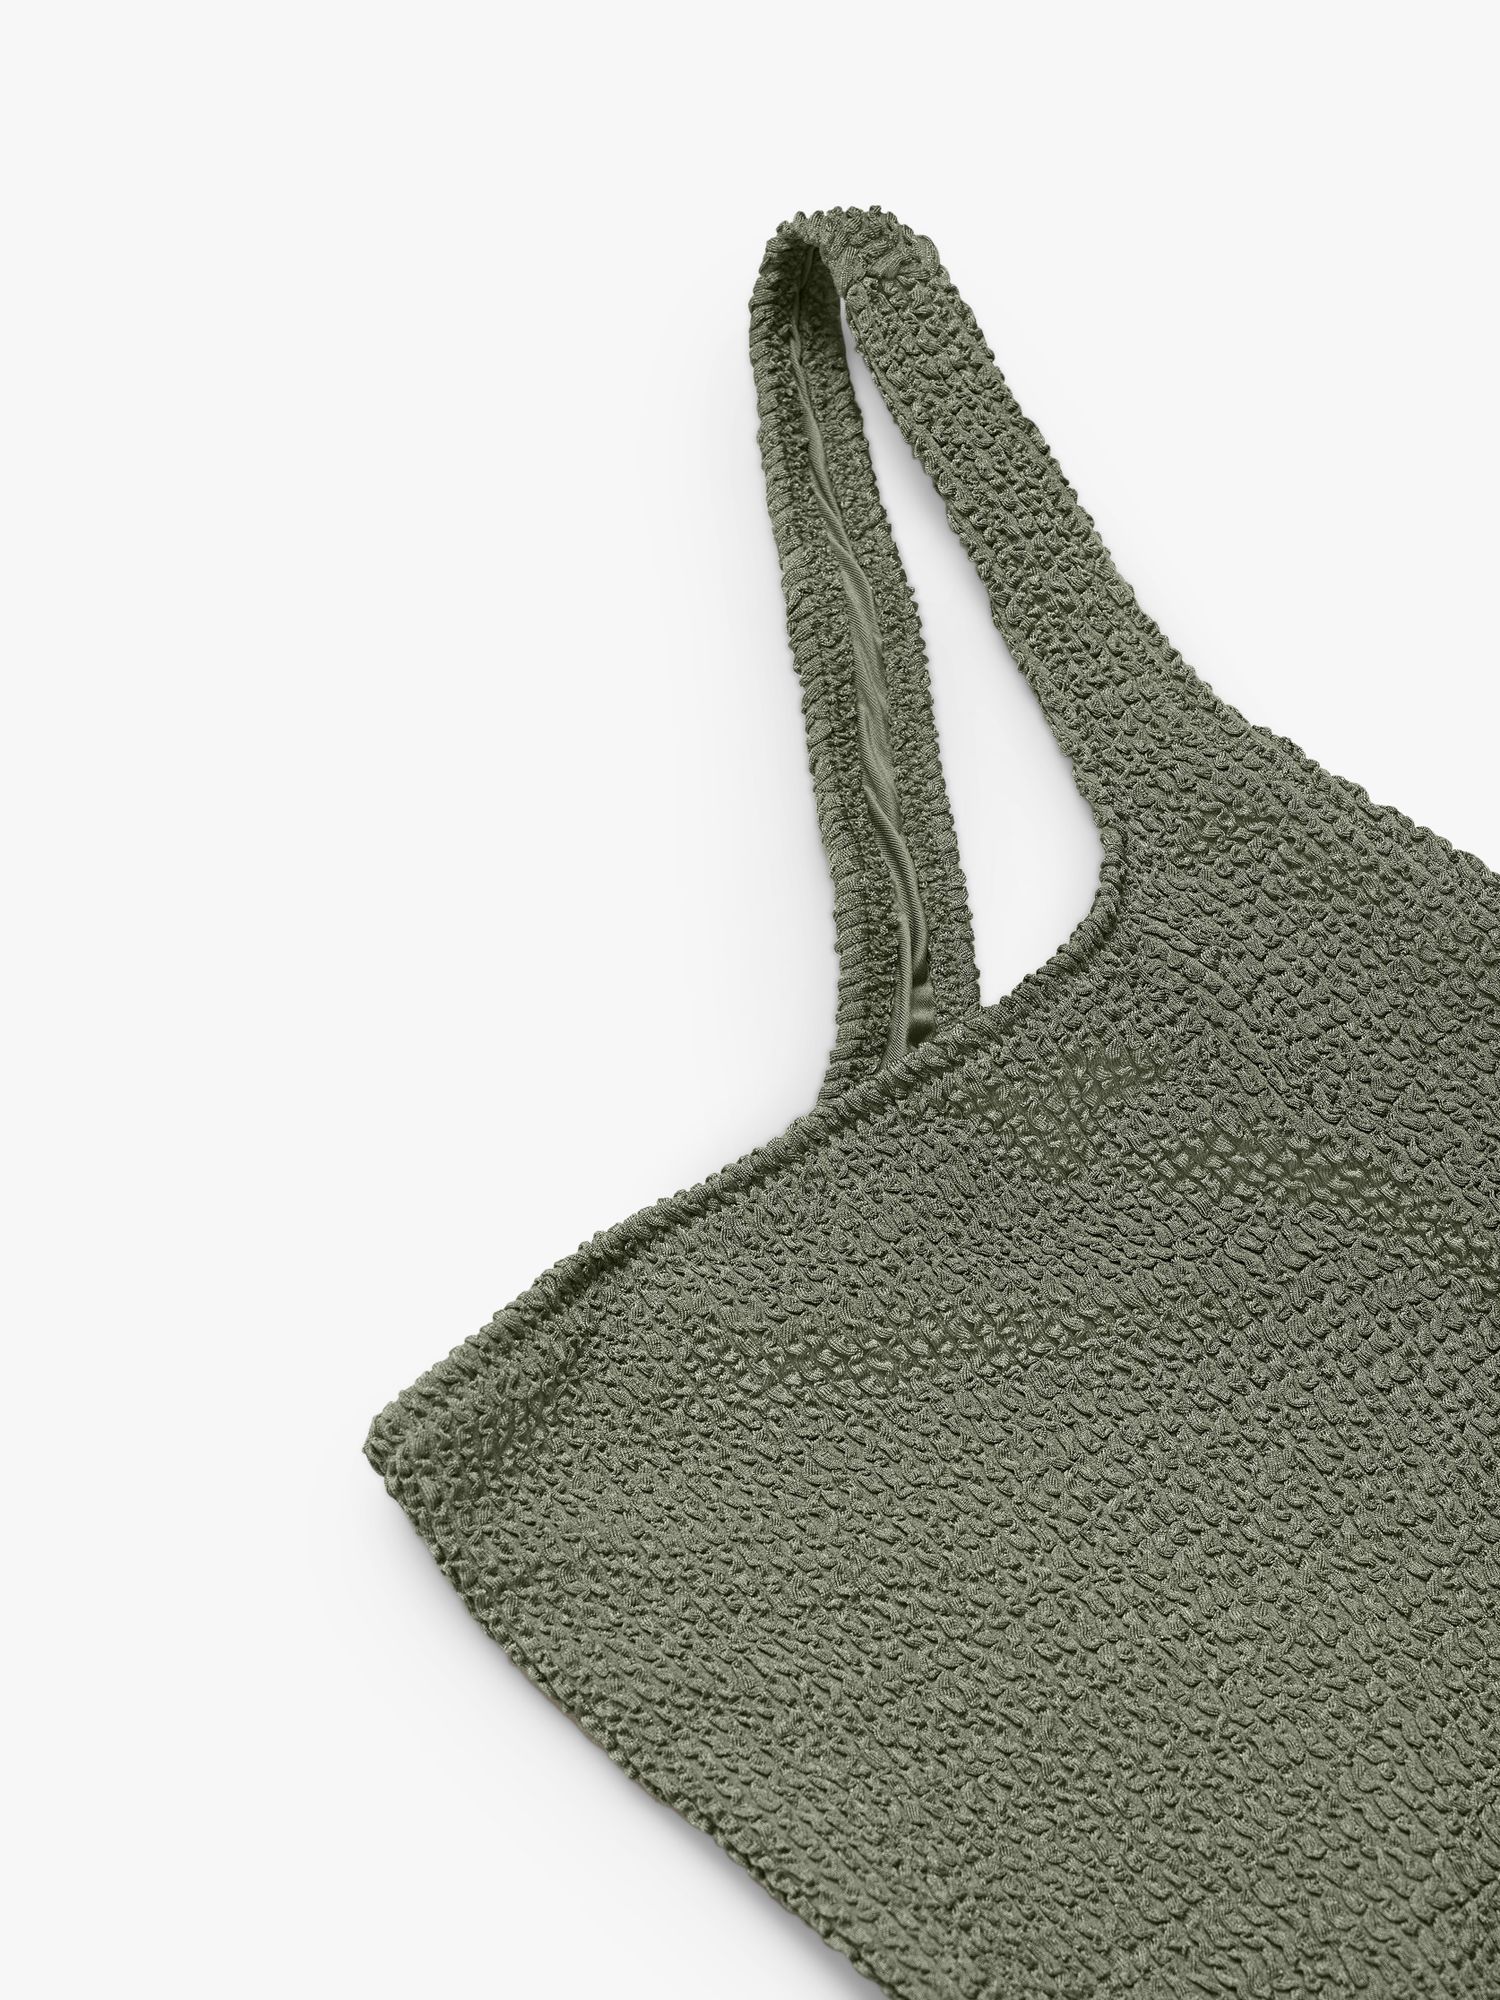 Mango Milos Asymmetrical Textured Swimsuit, Dark Green, S